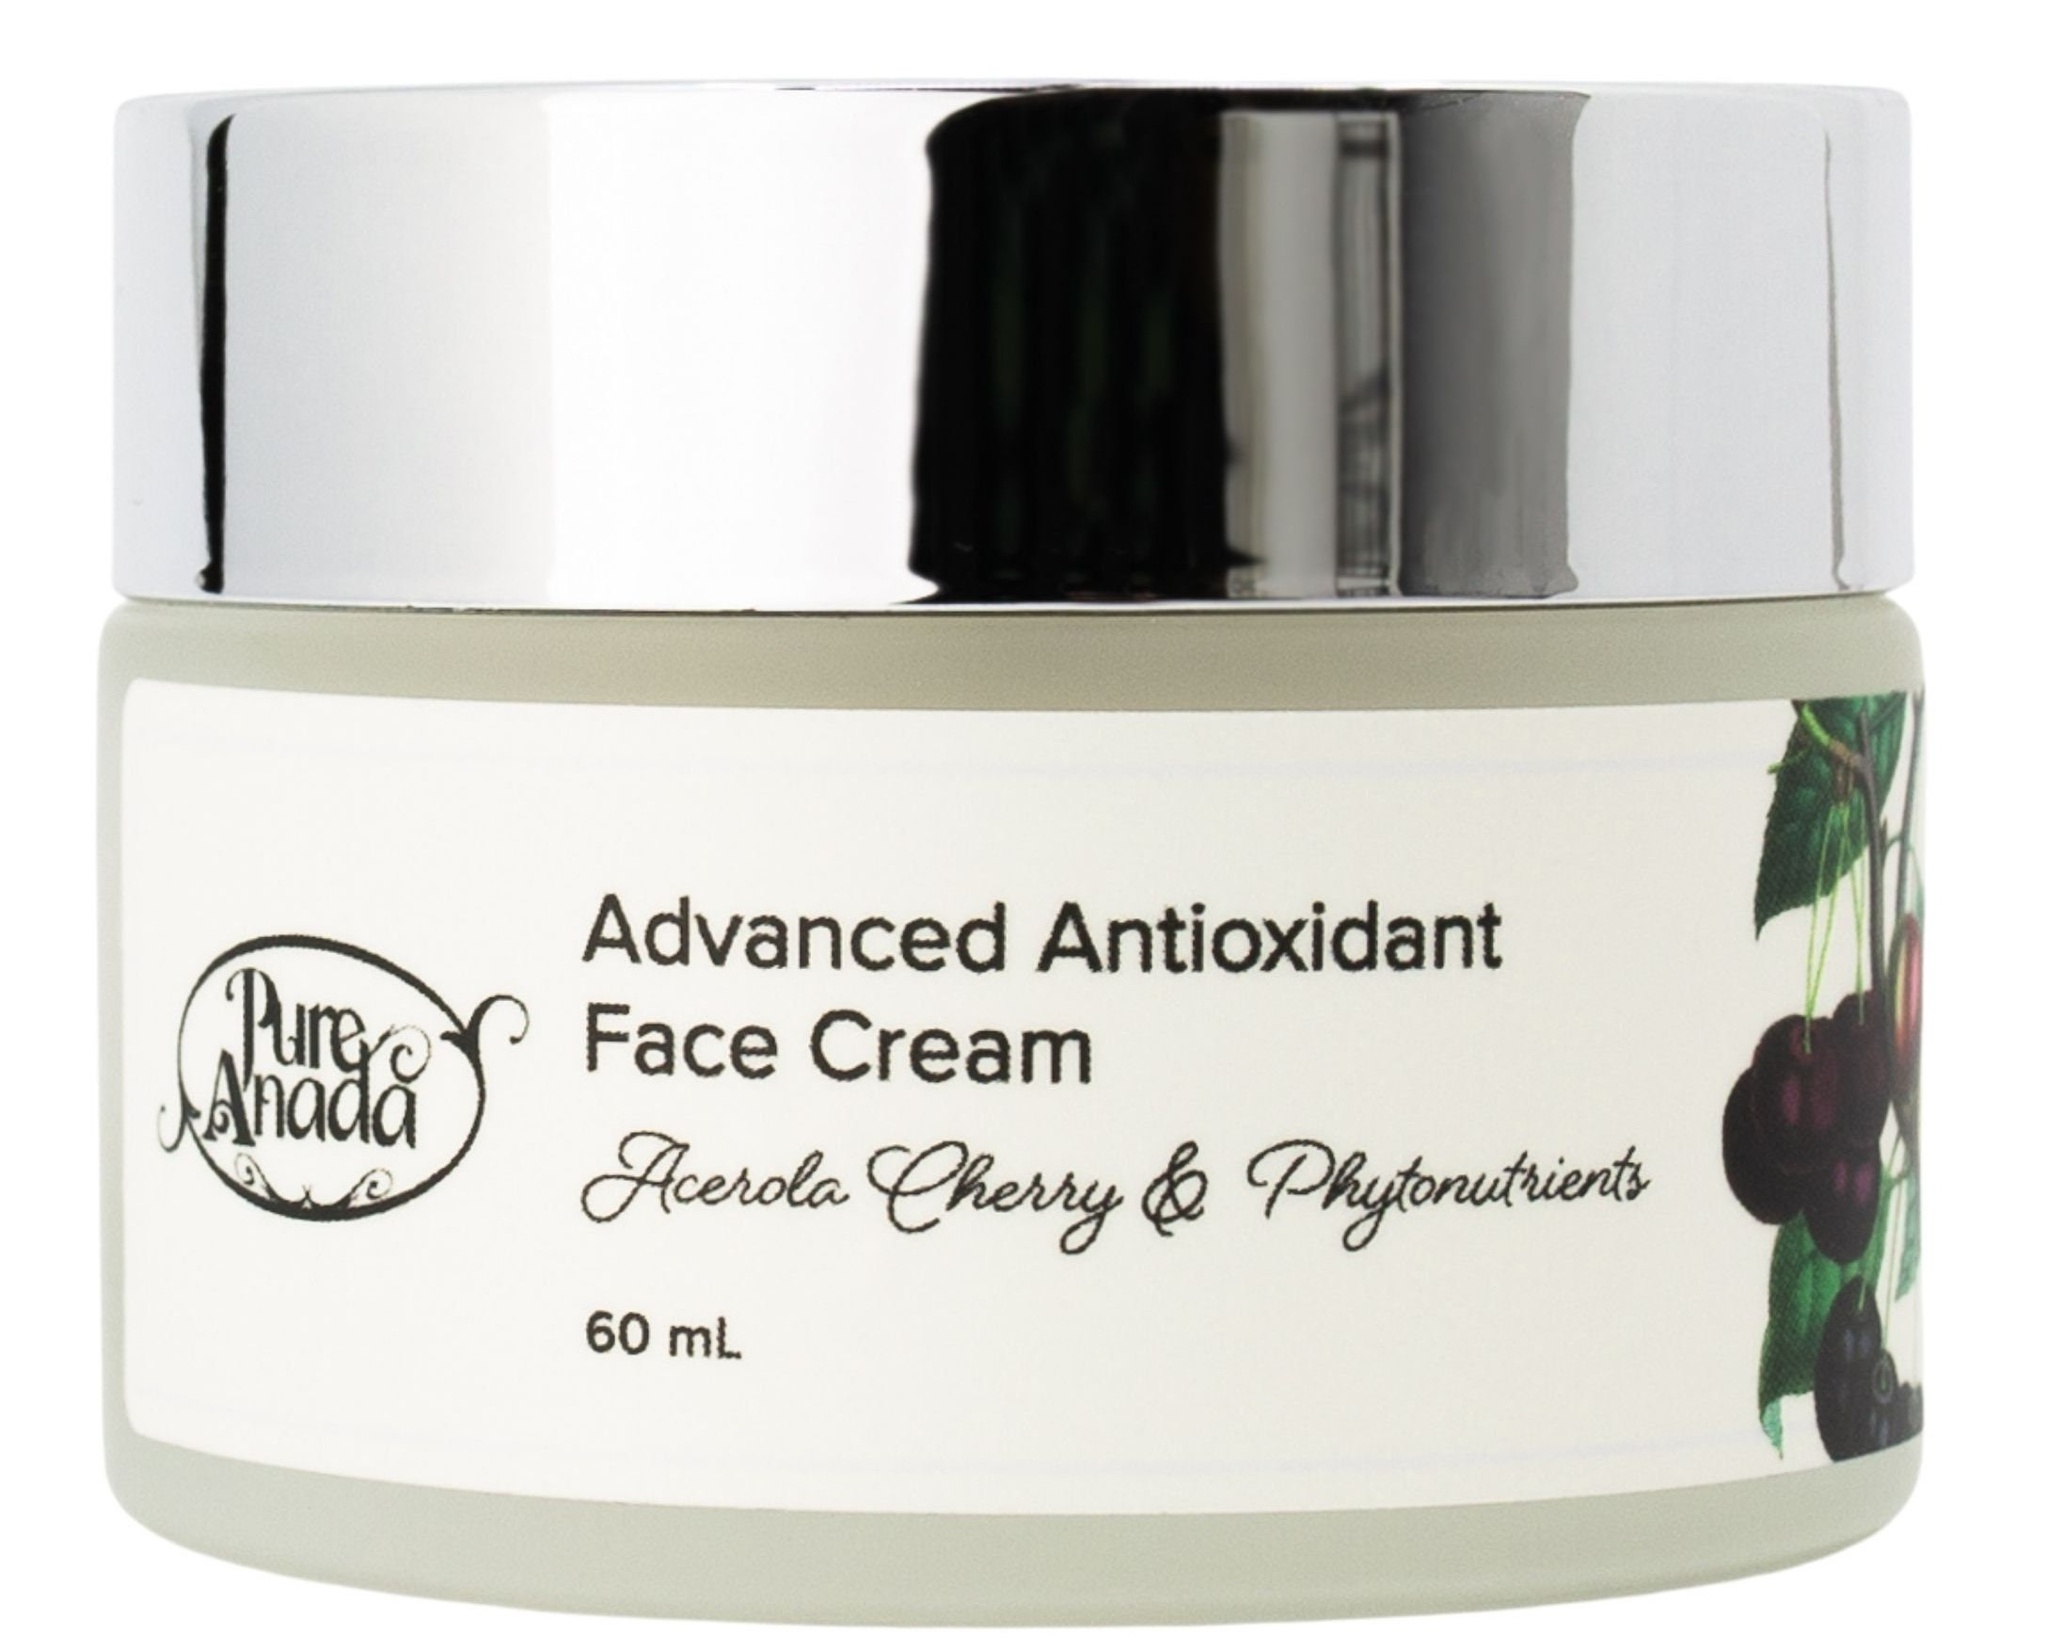 Pure Anada Advanced Antioxidant Face Cream